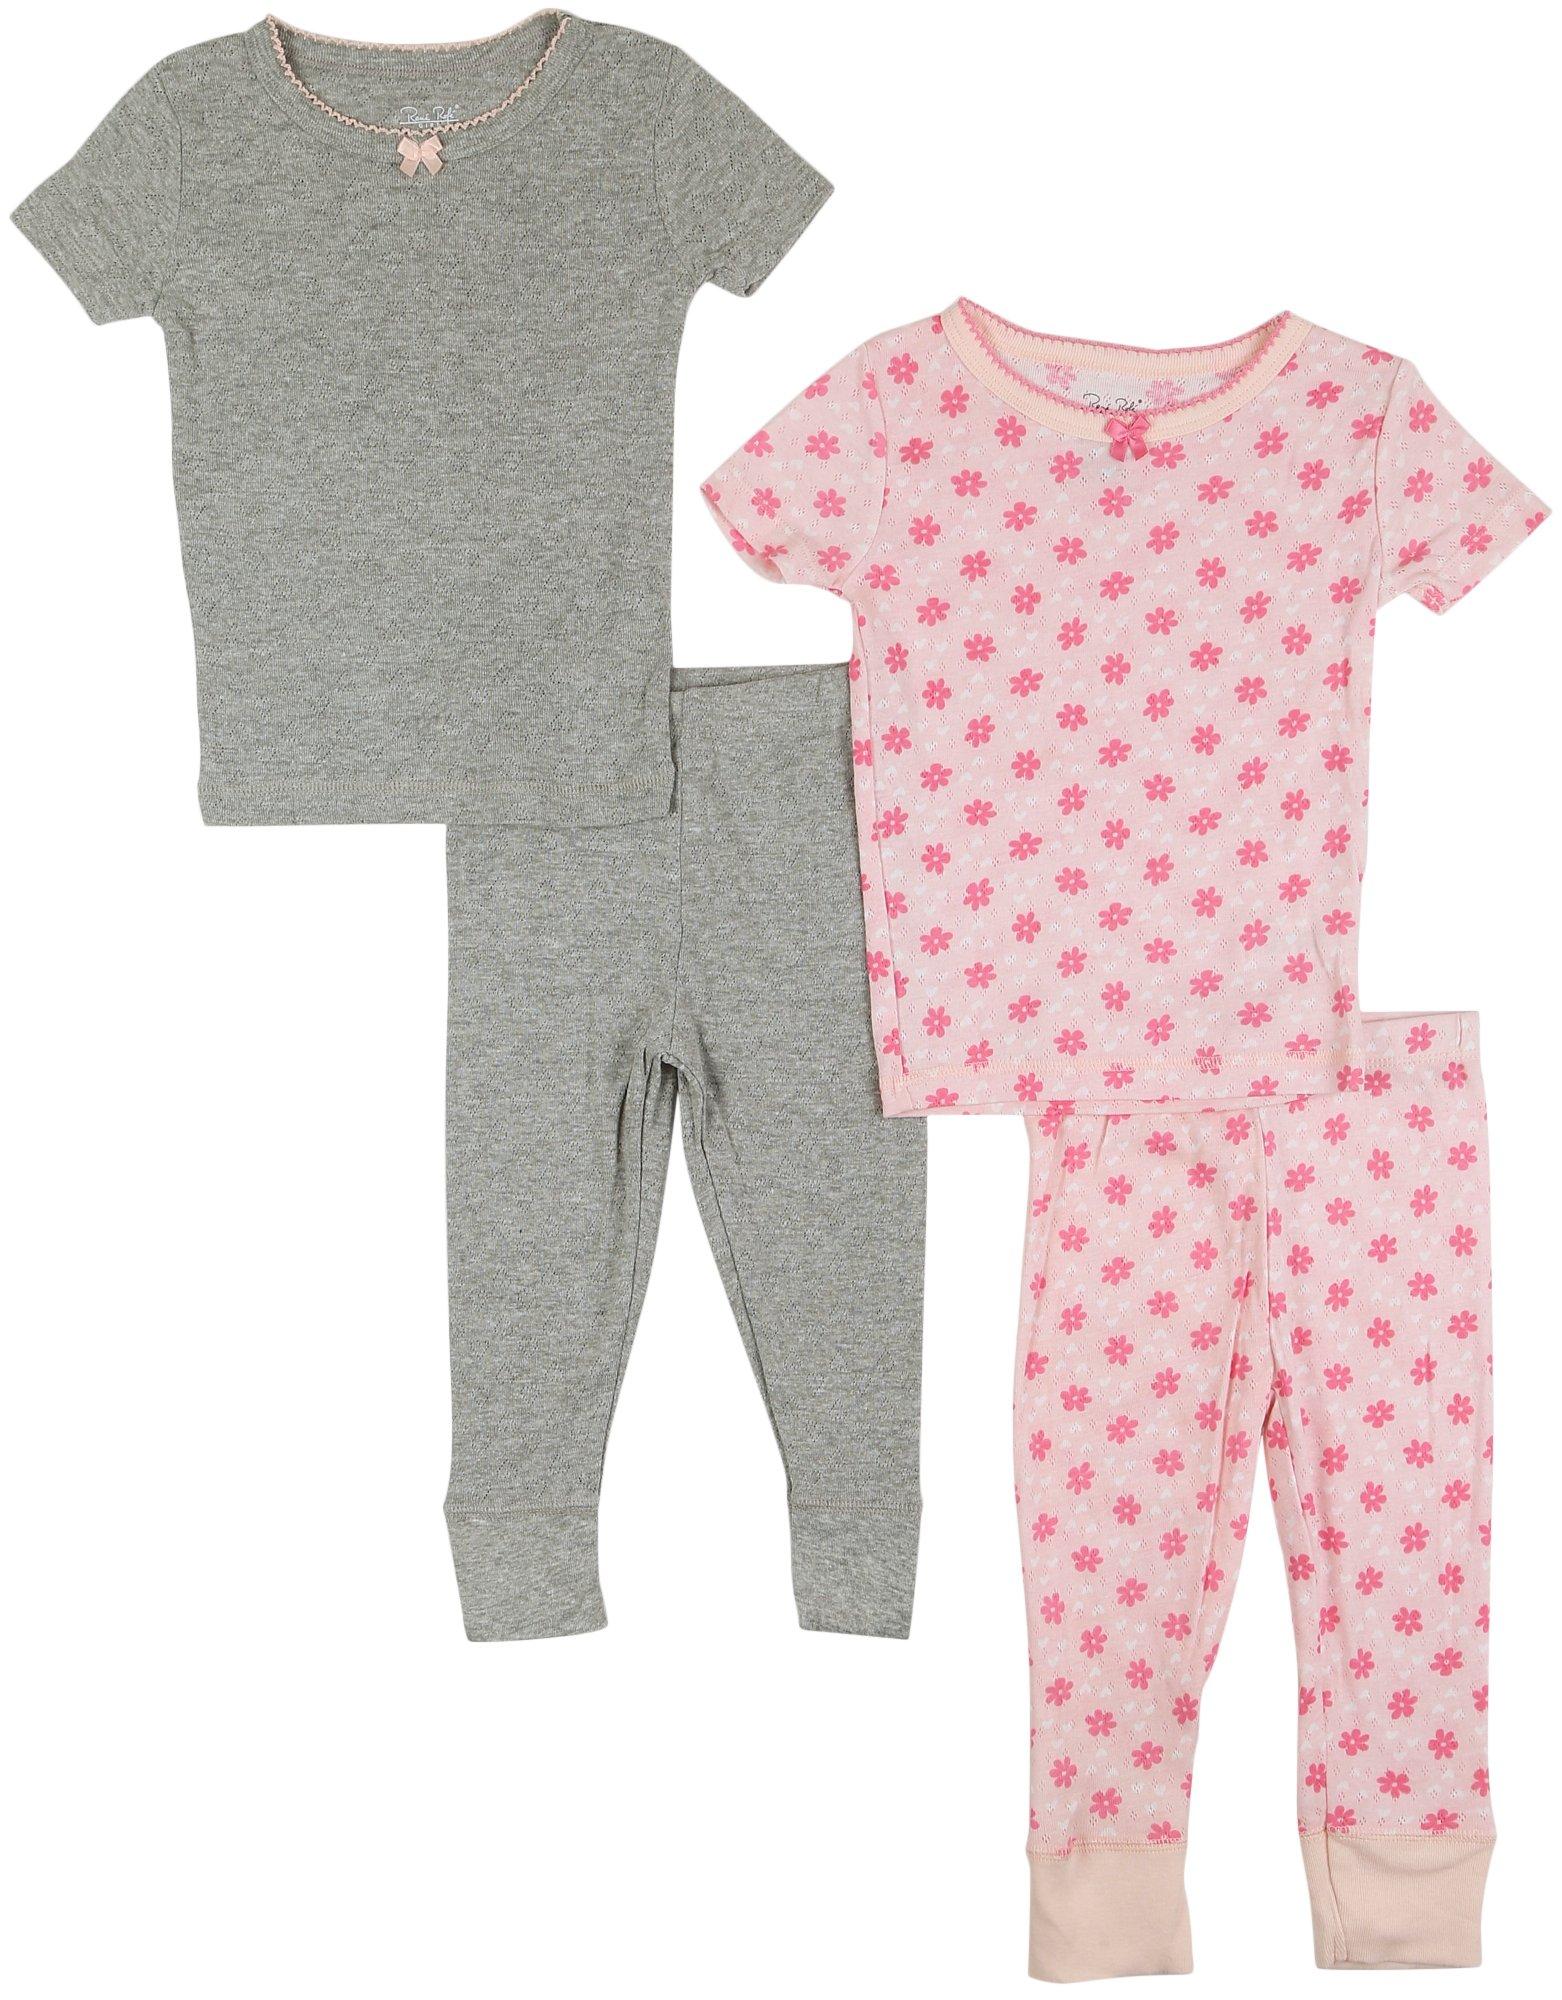 Toddler Girls 4-pc. Floral/Solid Tops/Pants Set